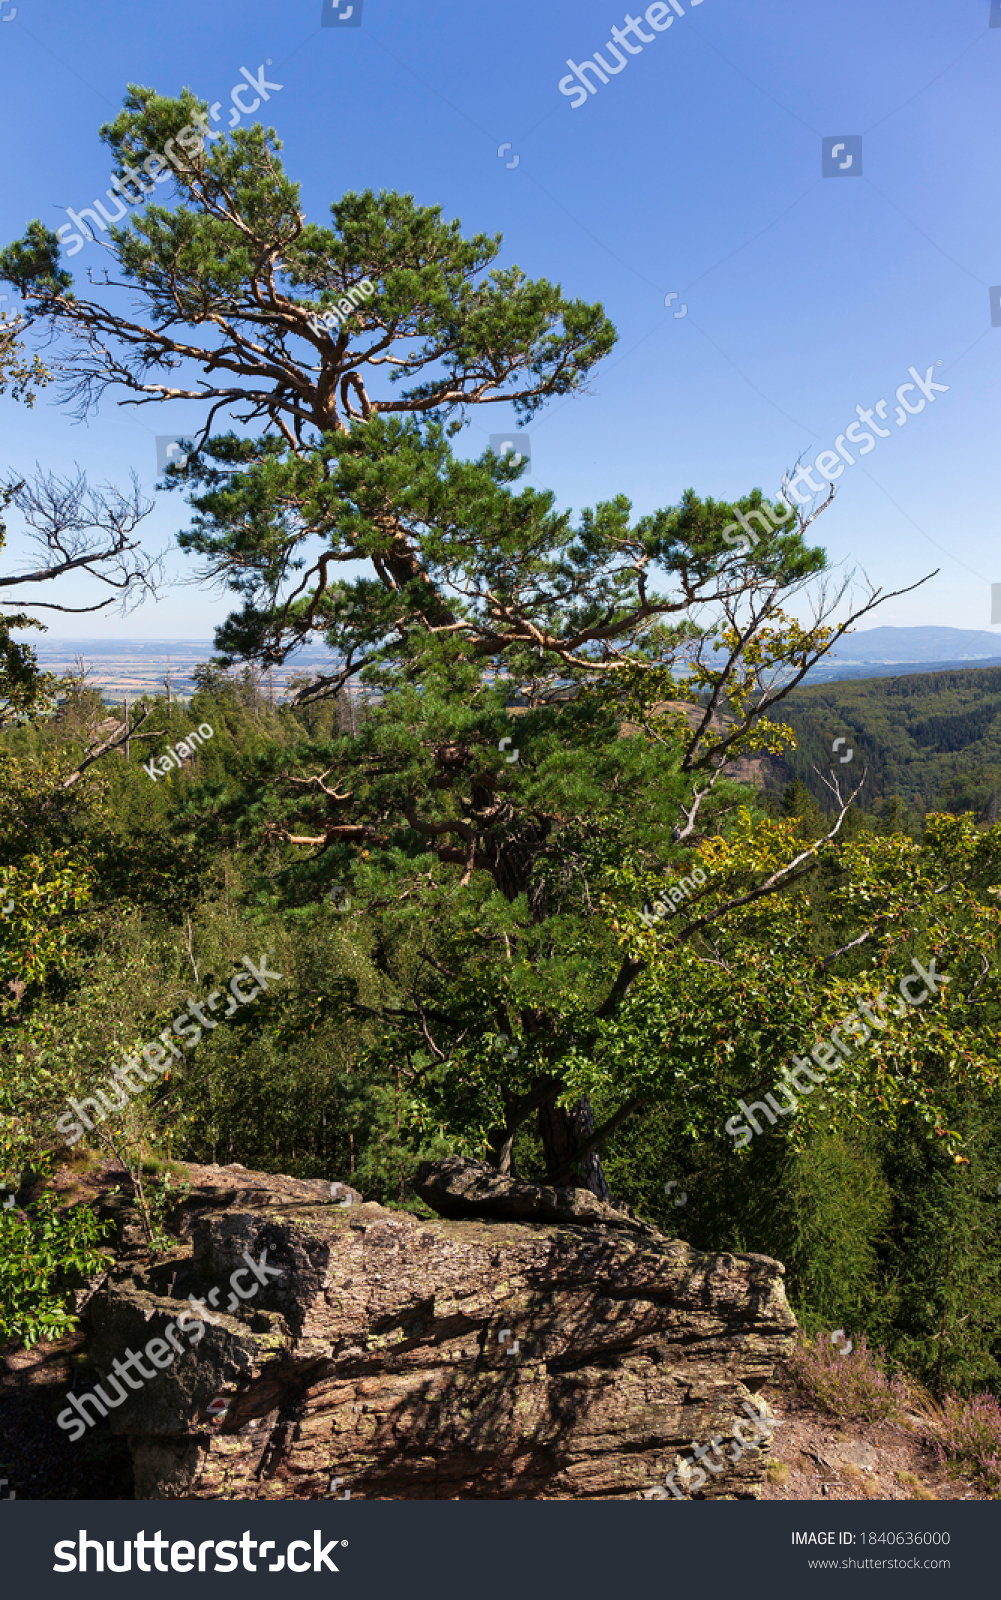 Landscape from the Hill High Rock, Vysoky Kamen, in Rychlebske Mountains, Czech Republic #1840636000